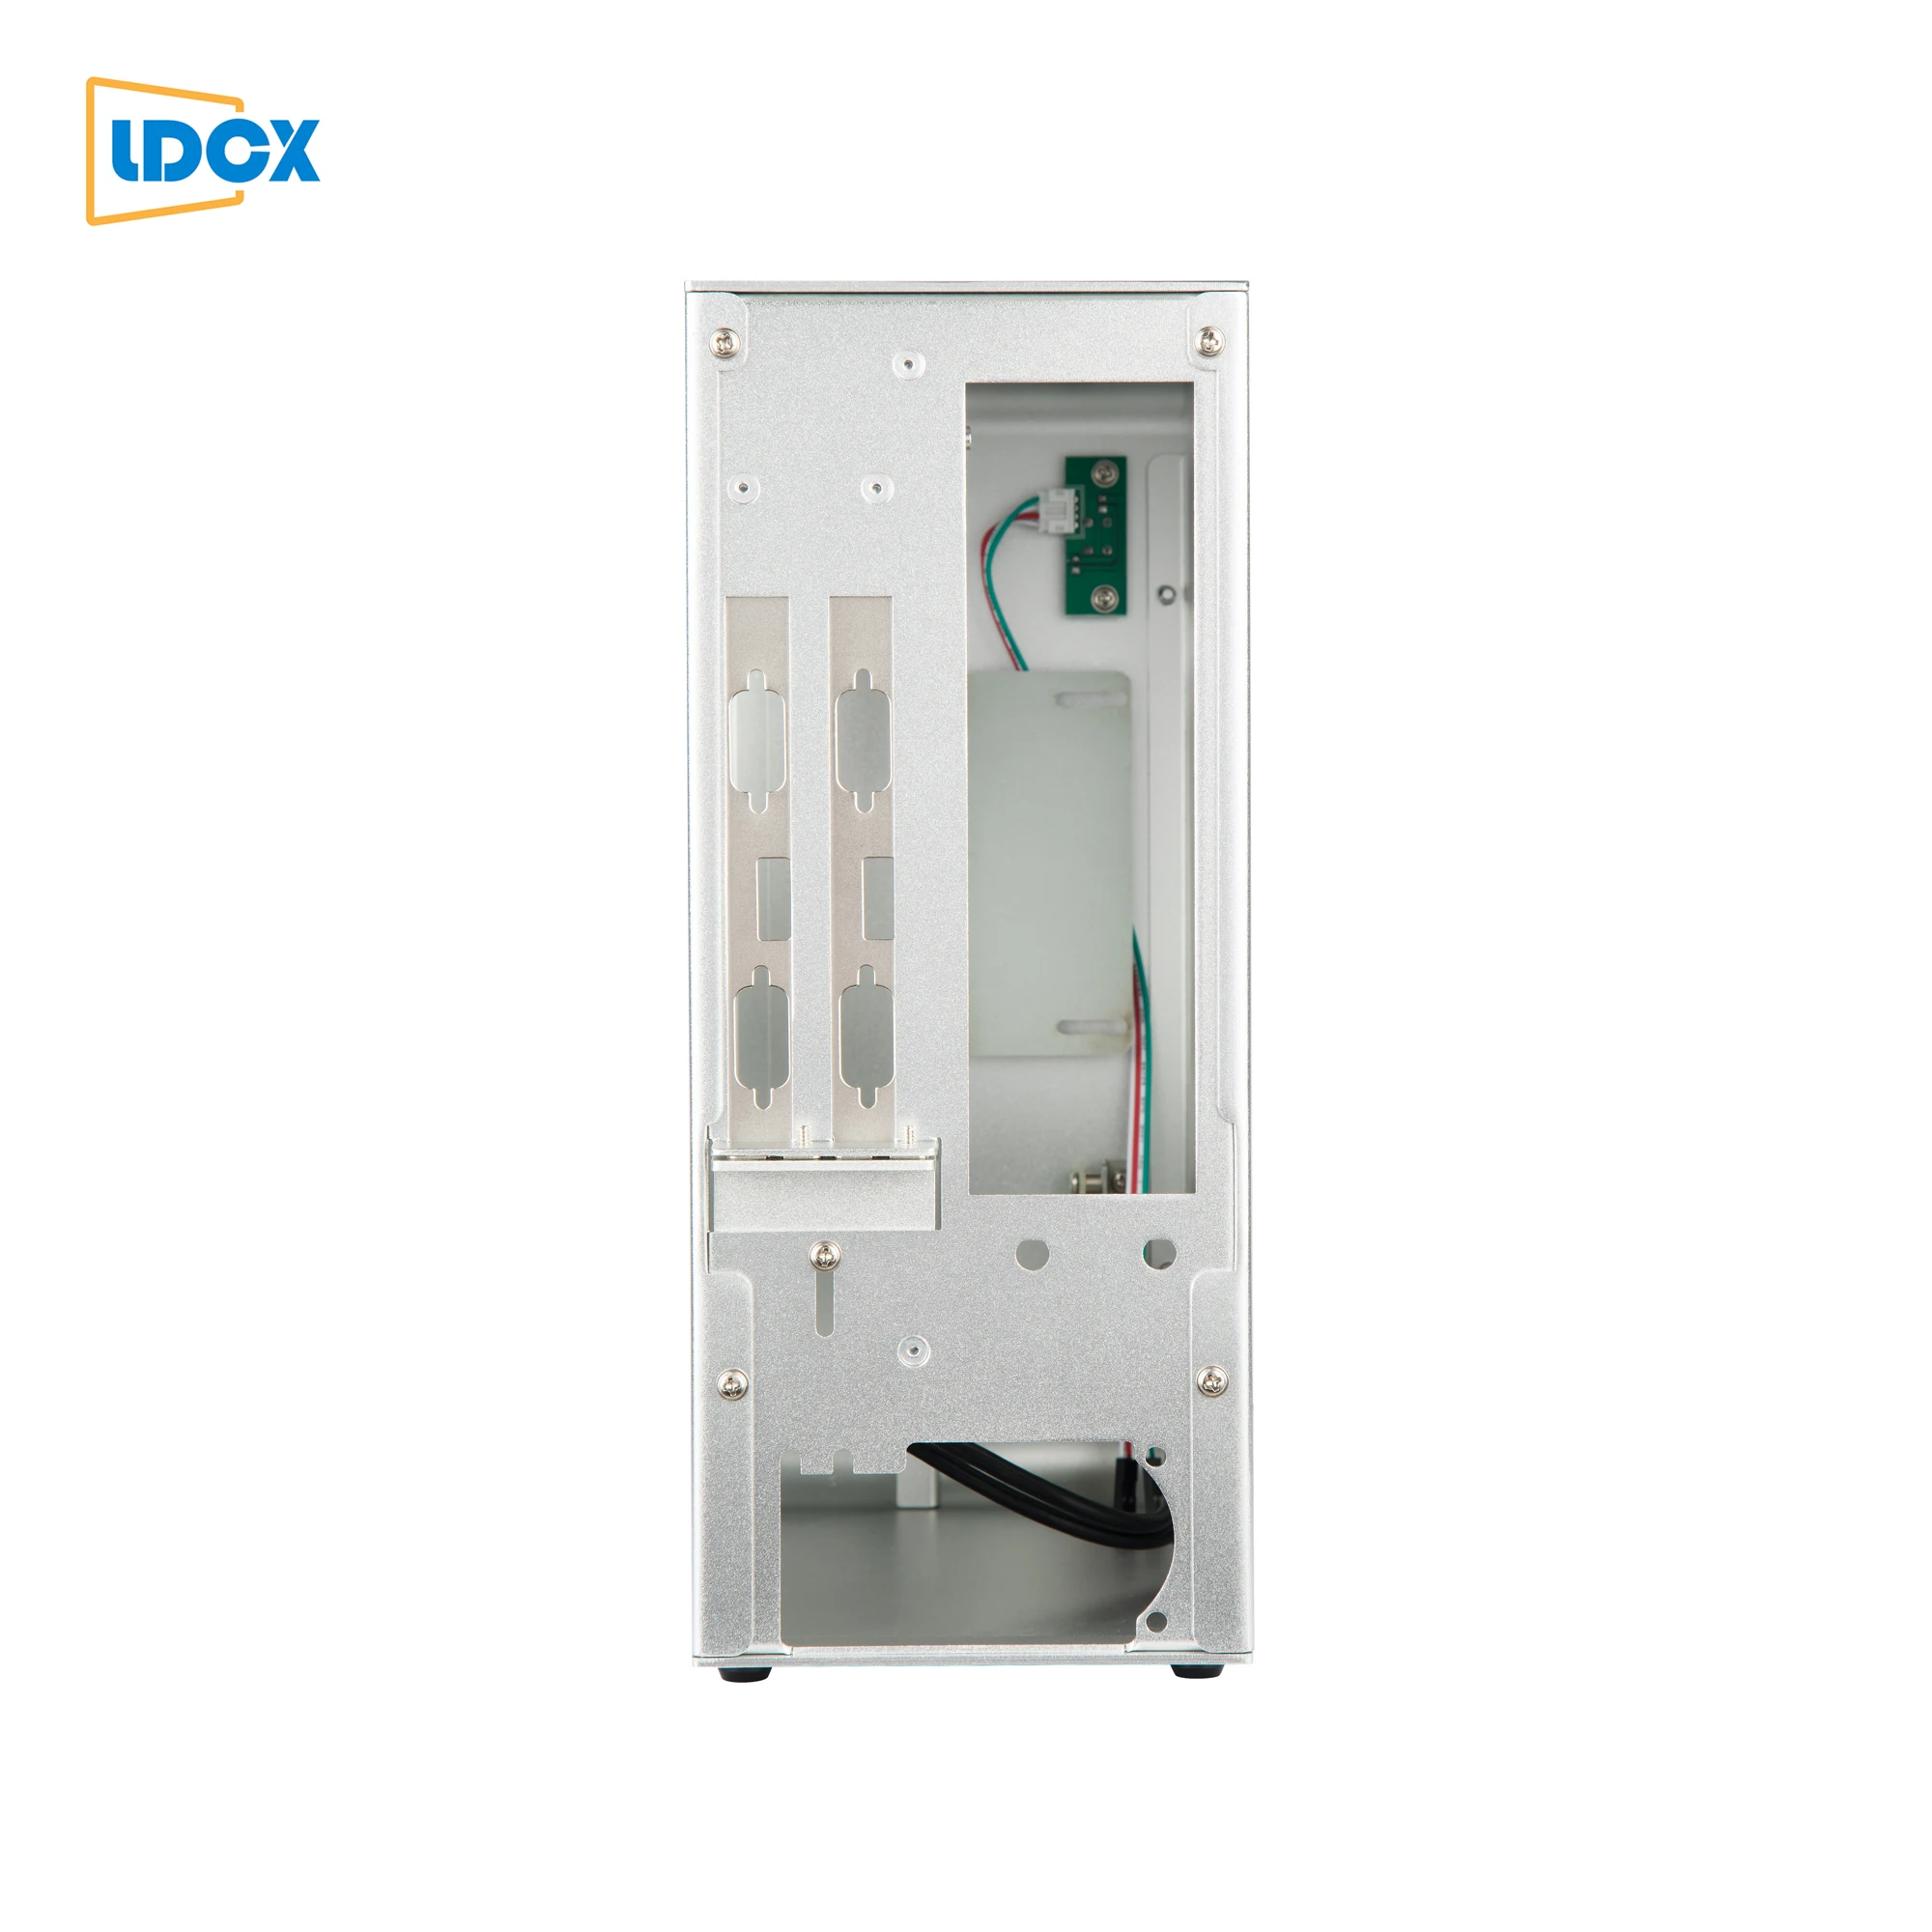 LDCX U110 pure aluminum vertical ITX desktop mini PC computer case